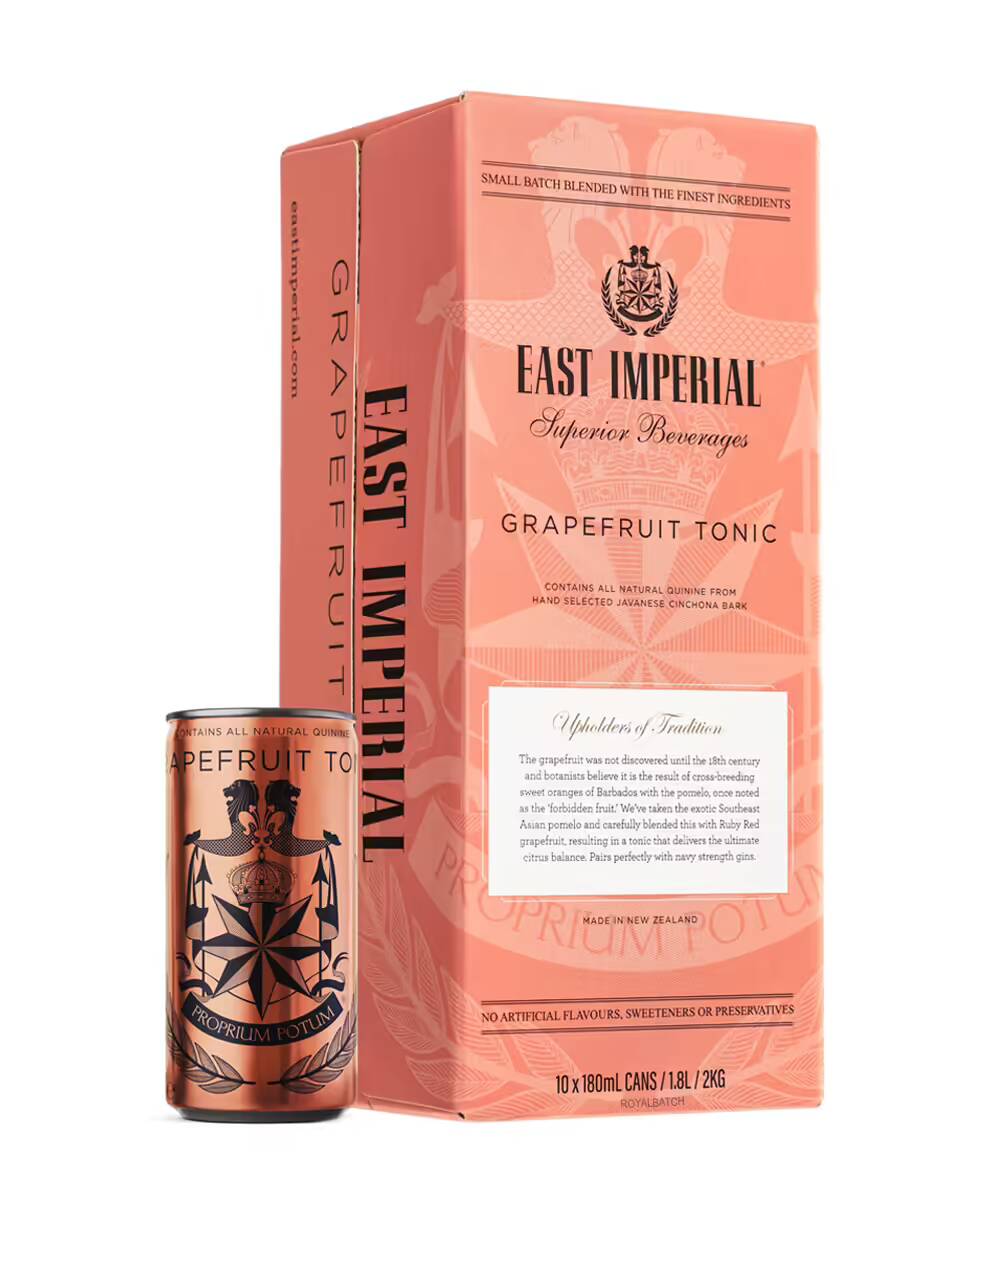 East Imperial Superior Beverages Grapefruit Tonic (10 PACK) 6.1 FL OZ CANS